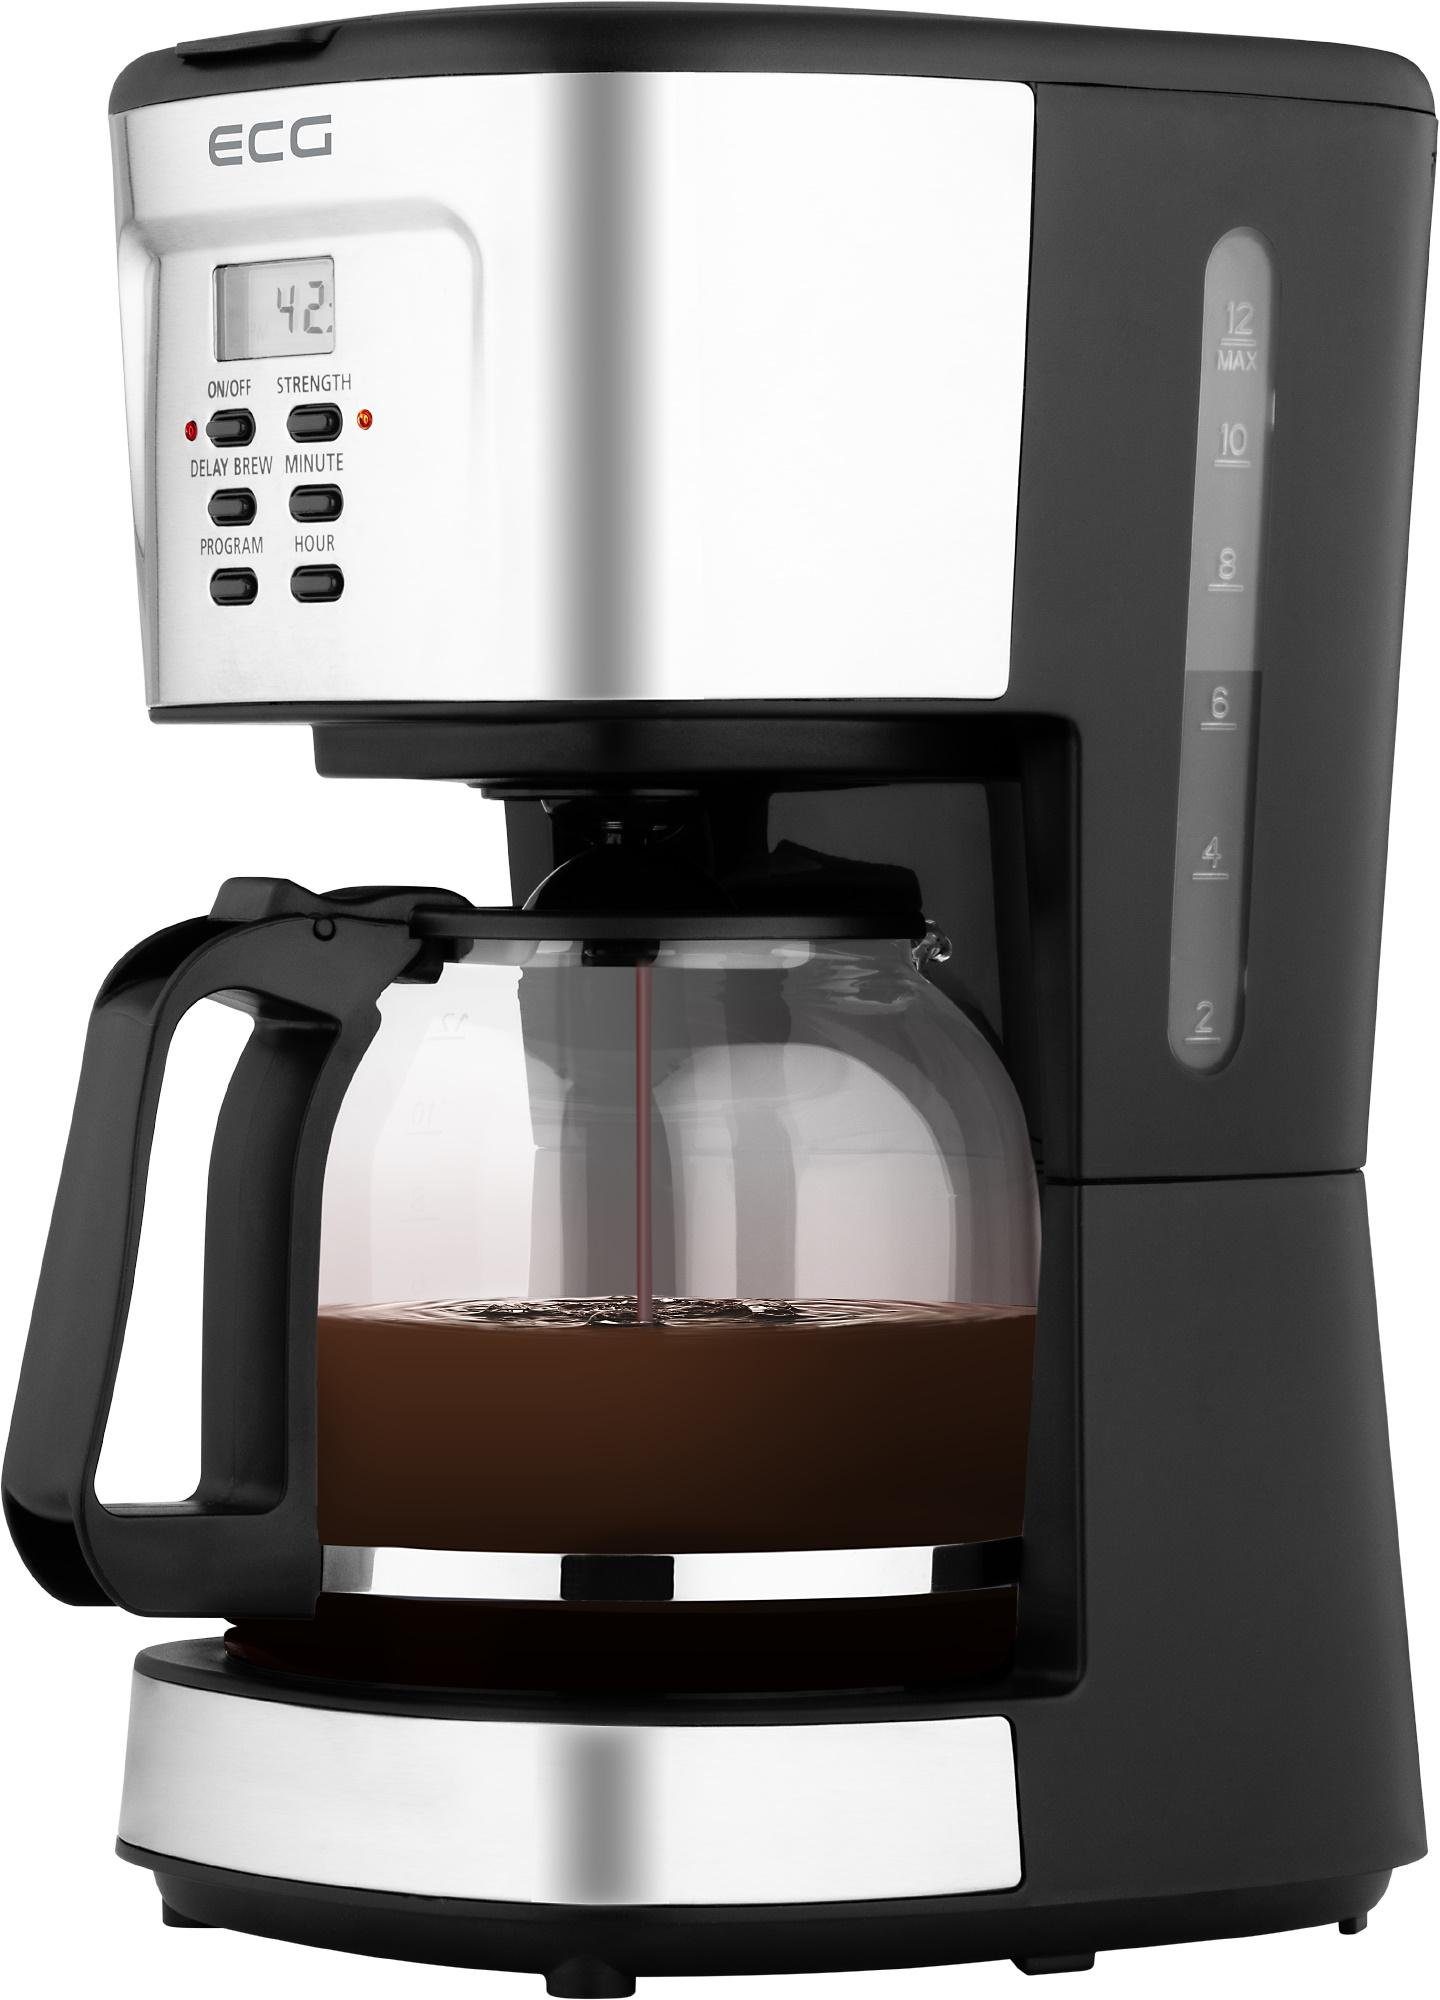 ECG Filterkaffeemaschine KP 2125 Supreme, 1,5l Kaffeekanne, Permanentfilter  Herausnehmbarer/abwaschbarer Filter, Zubereitung von bis zu 12 Tassen  Kaffee, Warmhaltefunktion, Für die Zubereitung von bis zu 12 Tassen Kaffee